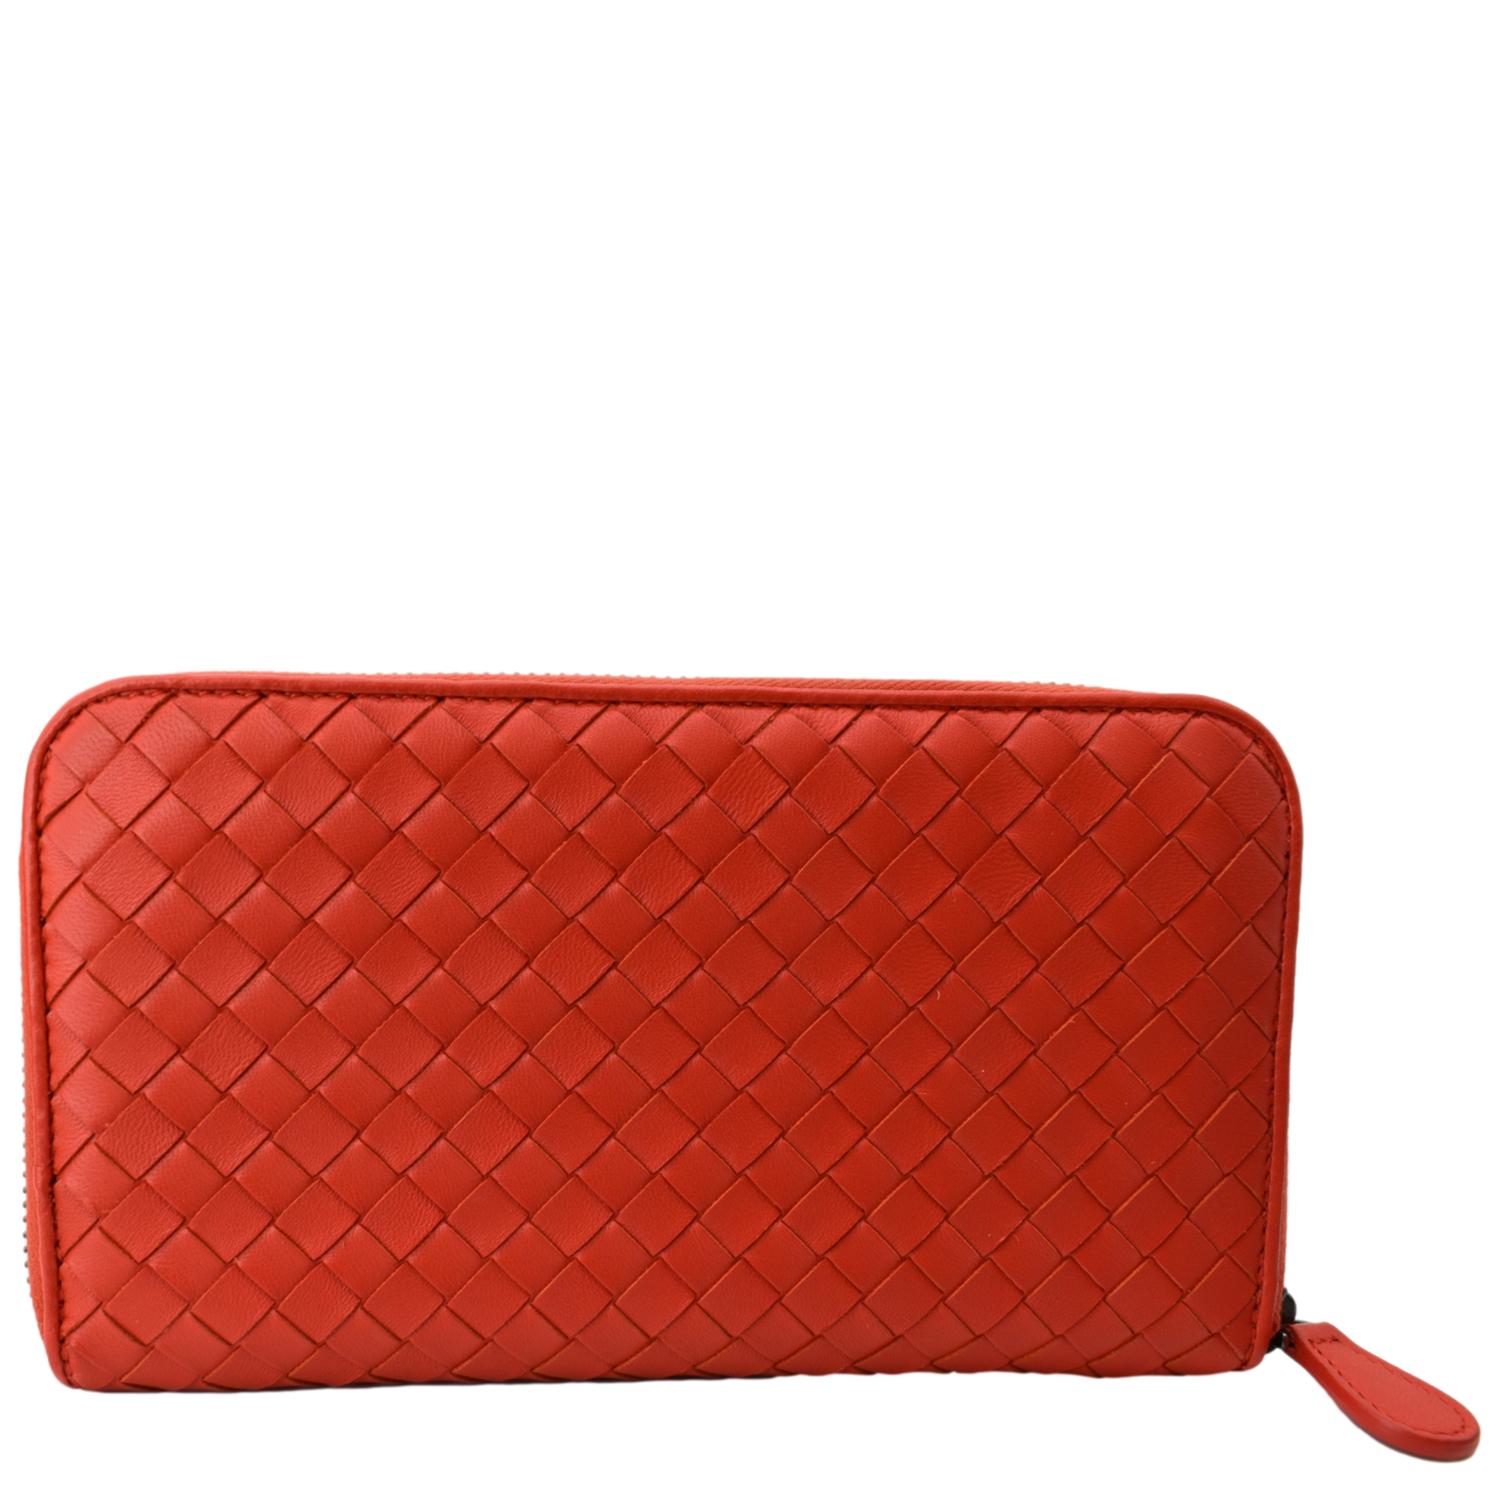 Bottega Veneta Red Intrecciato Leather Half Zip Wallet Bottega